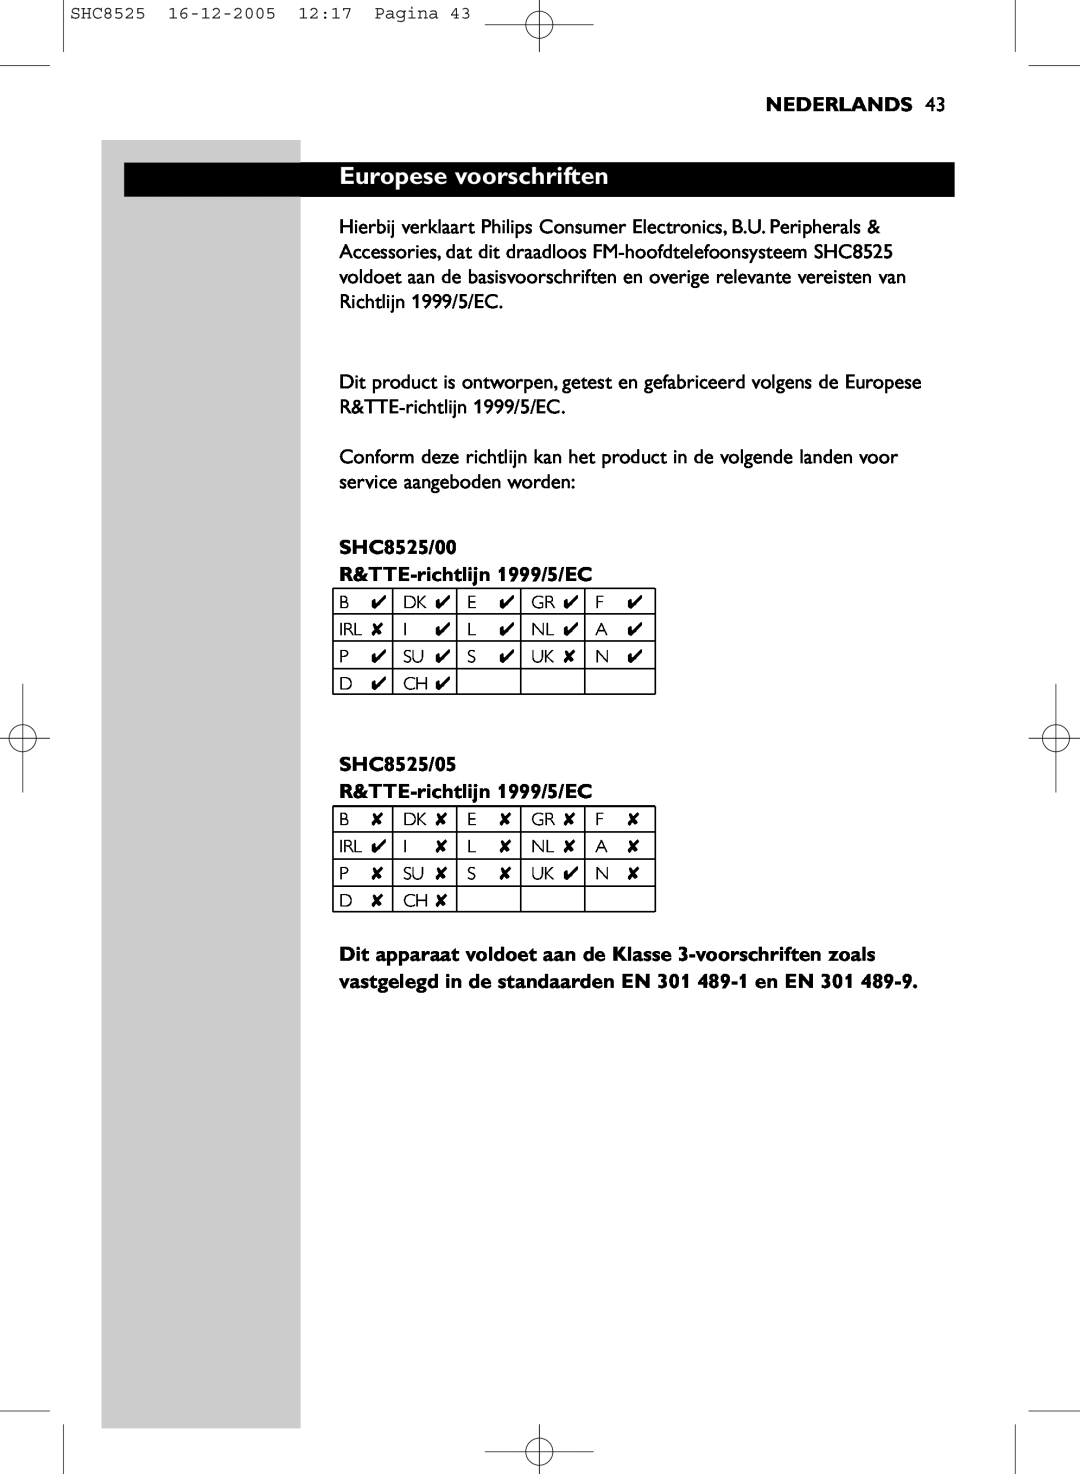 Event electronic manual Europese voorschriften, Nederlands, SHC8525/00 R&TTE-richtlijn1999/5/EC 